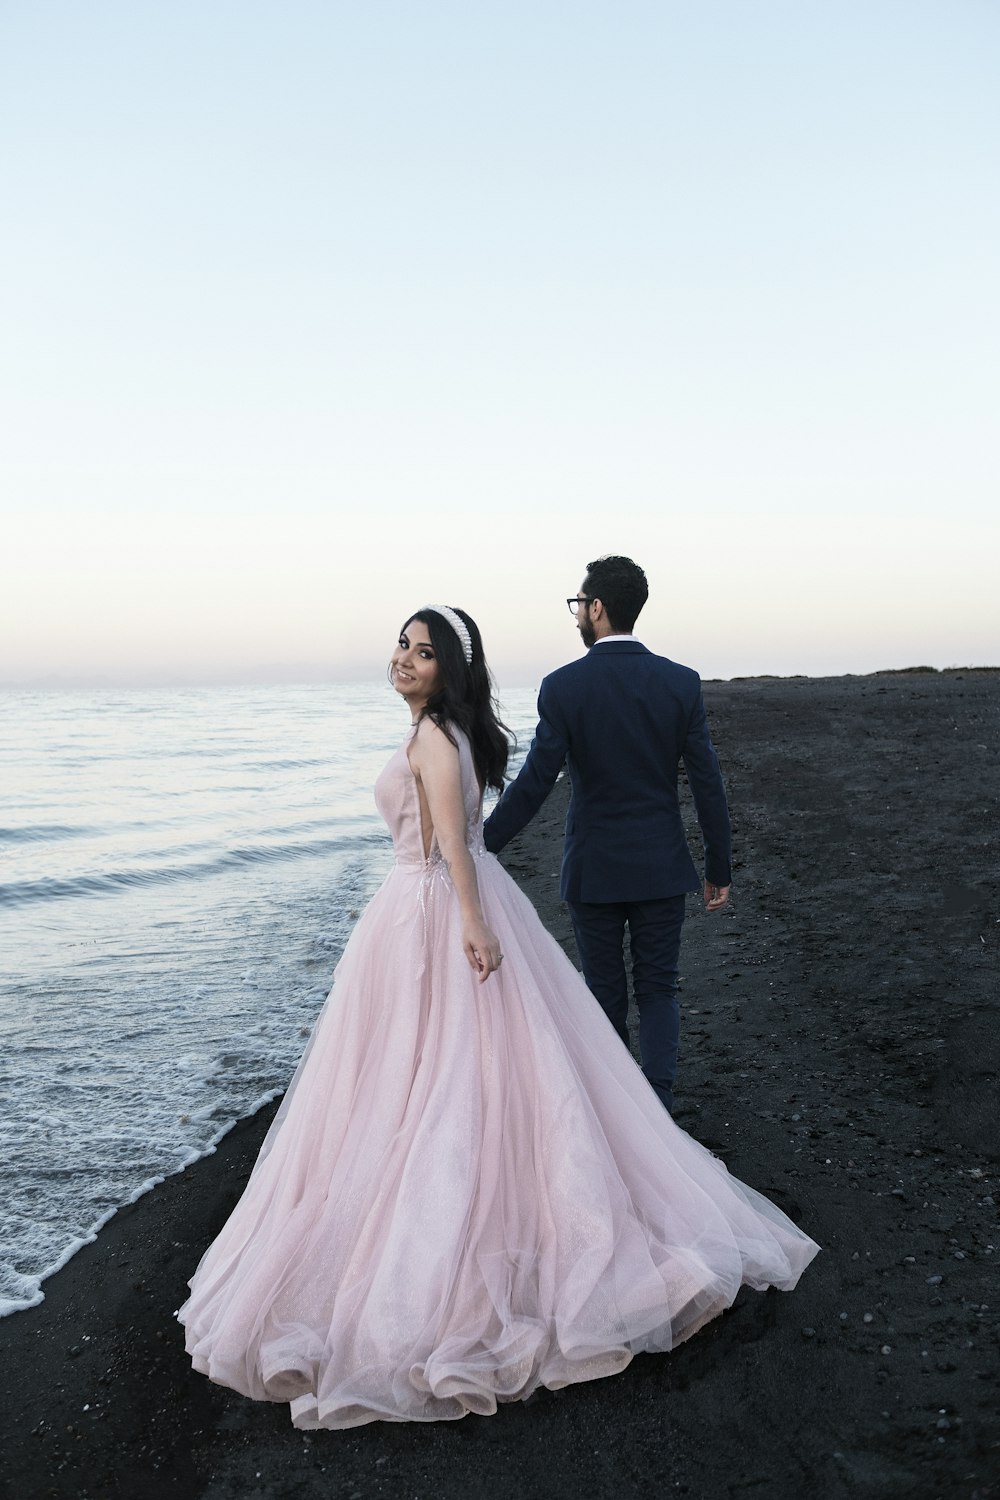 a man and a woman walking along a beach